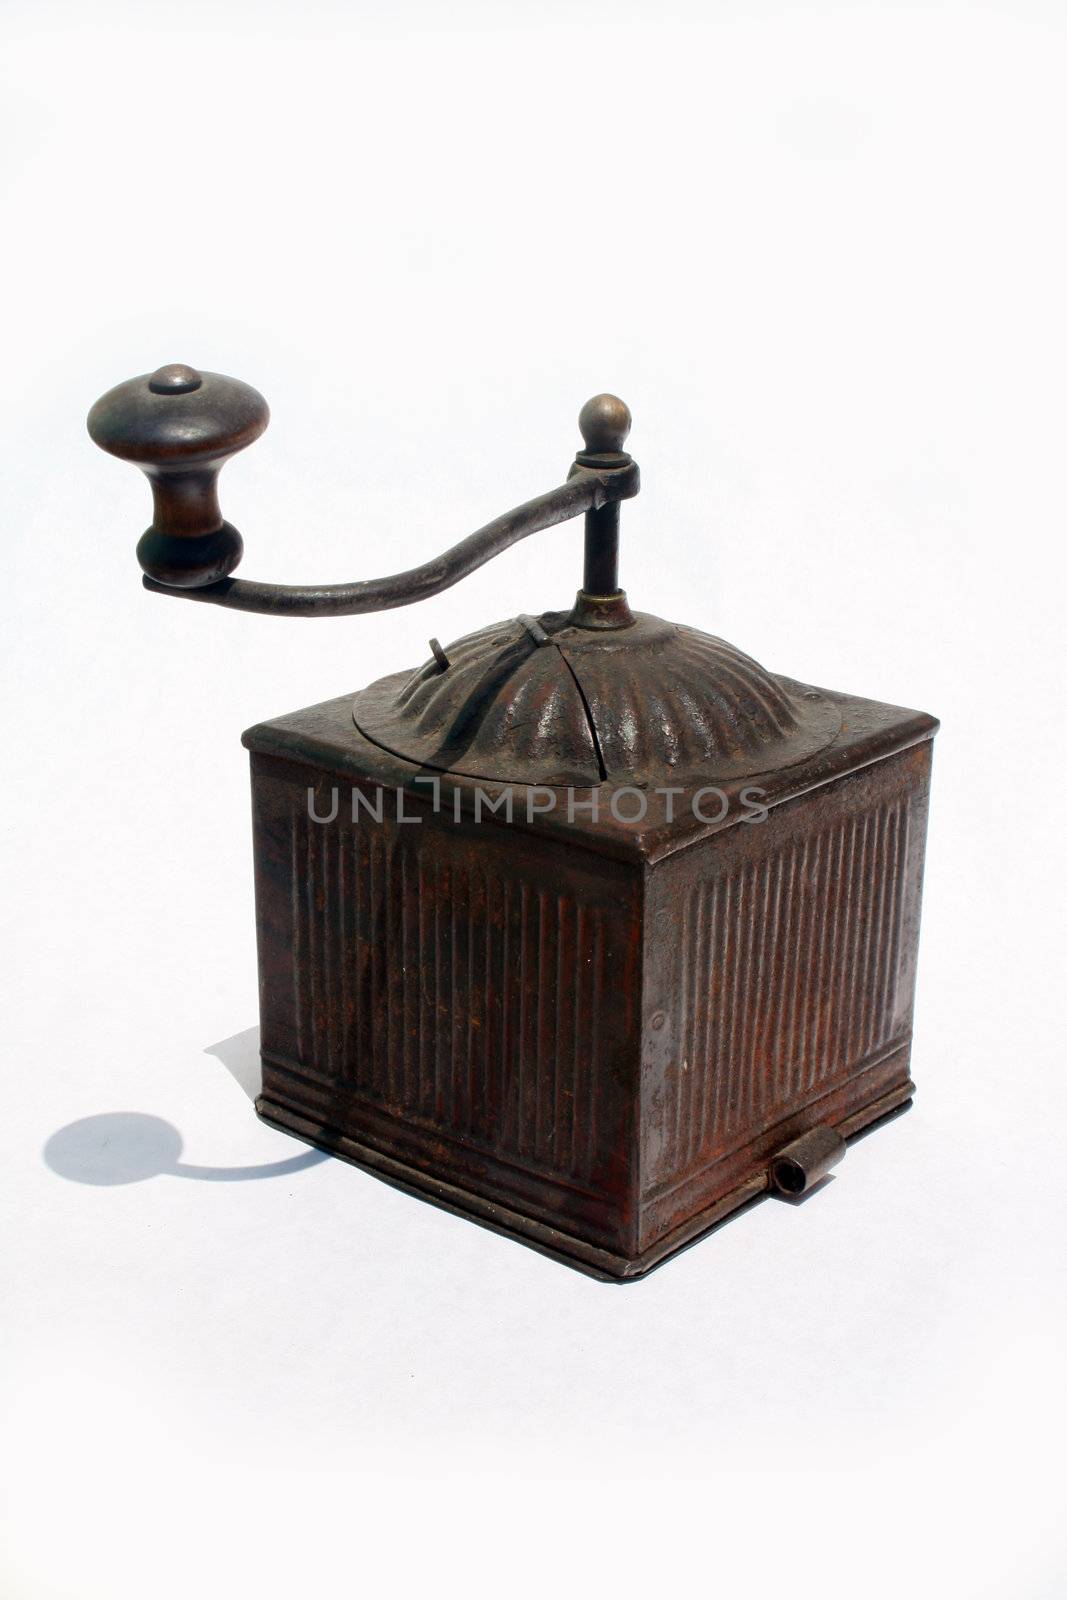 Antique spice grinder against white background